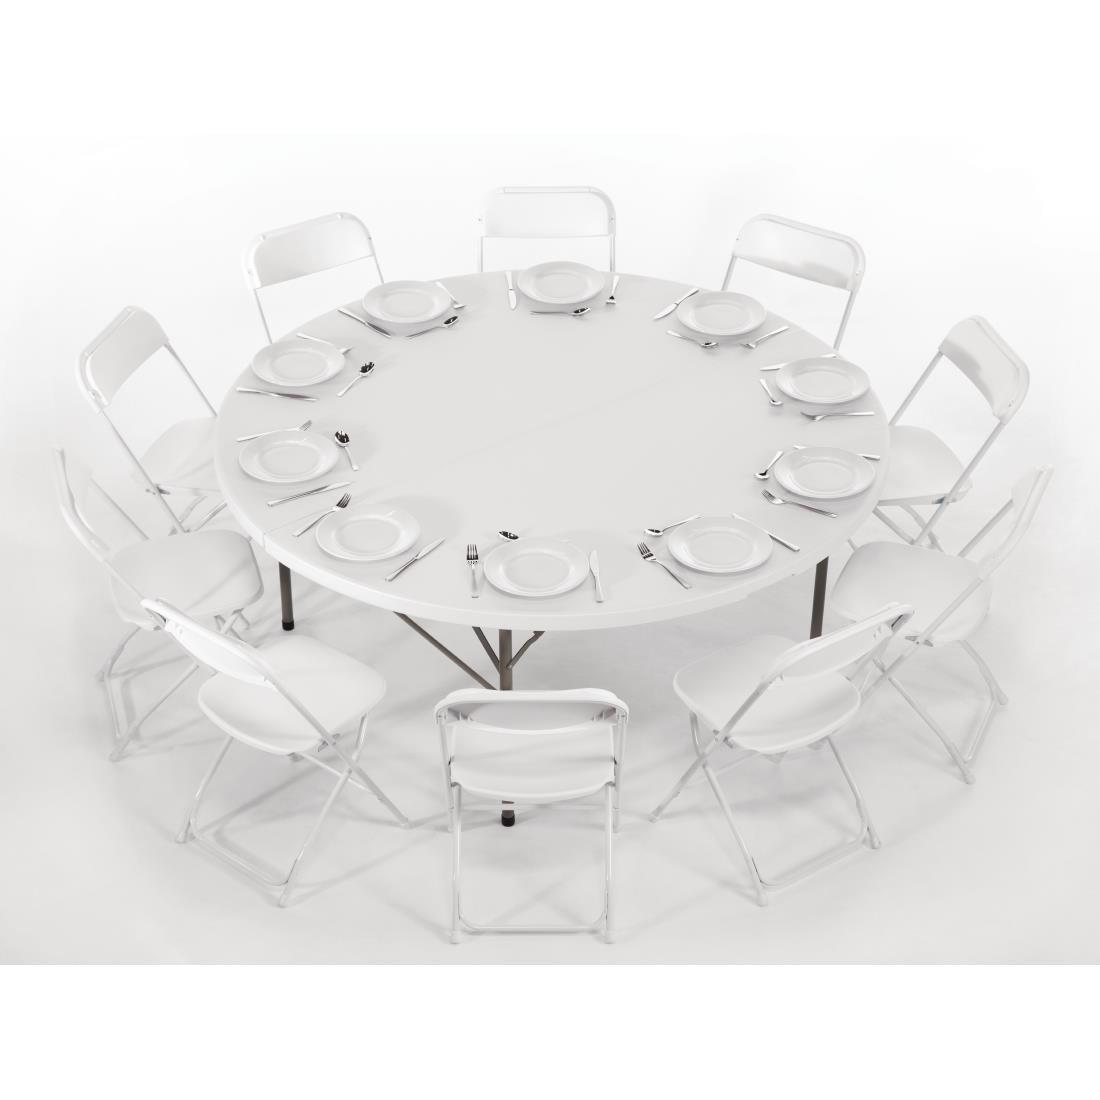 Bolero PP Folding Chairs White (Pack of 10) - GD387  - 5